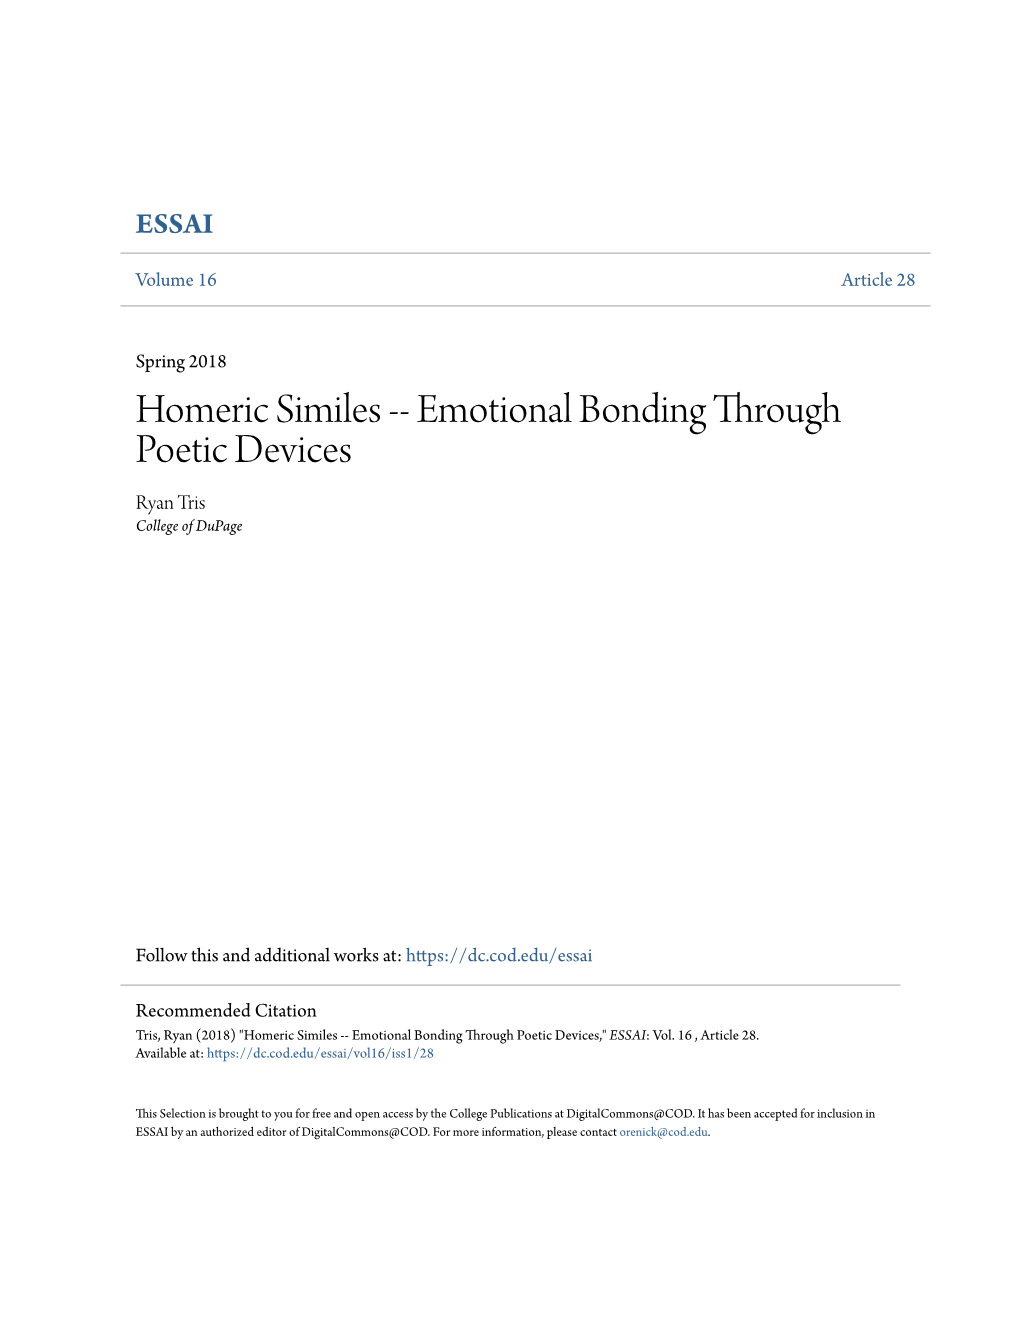 Homeric Similes -- Emotional Bonding Through Poetic Devices Ryan Tris College of Dupage